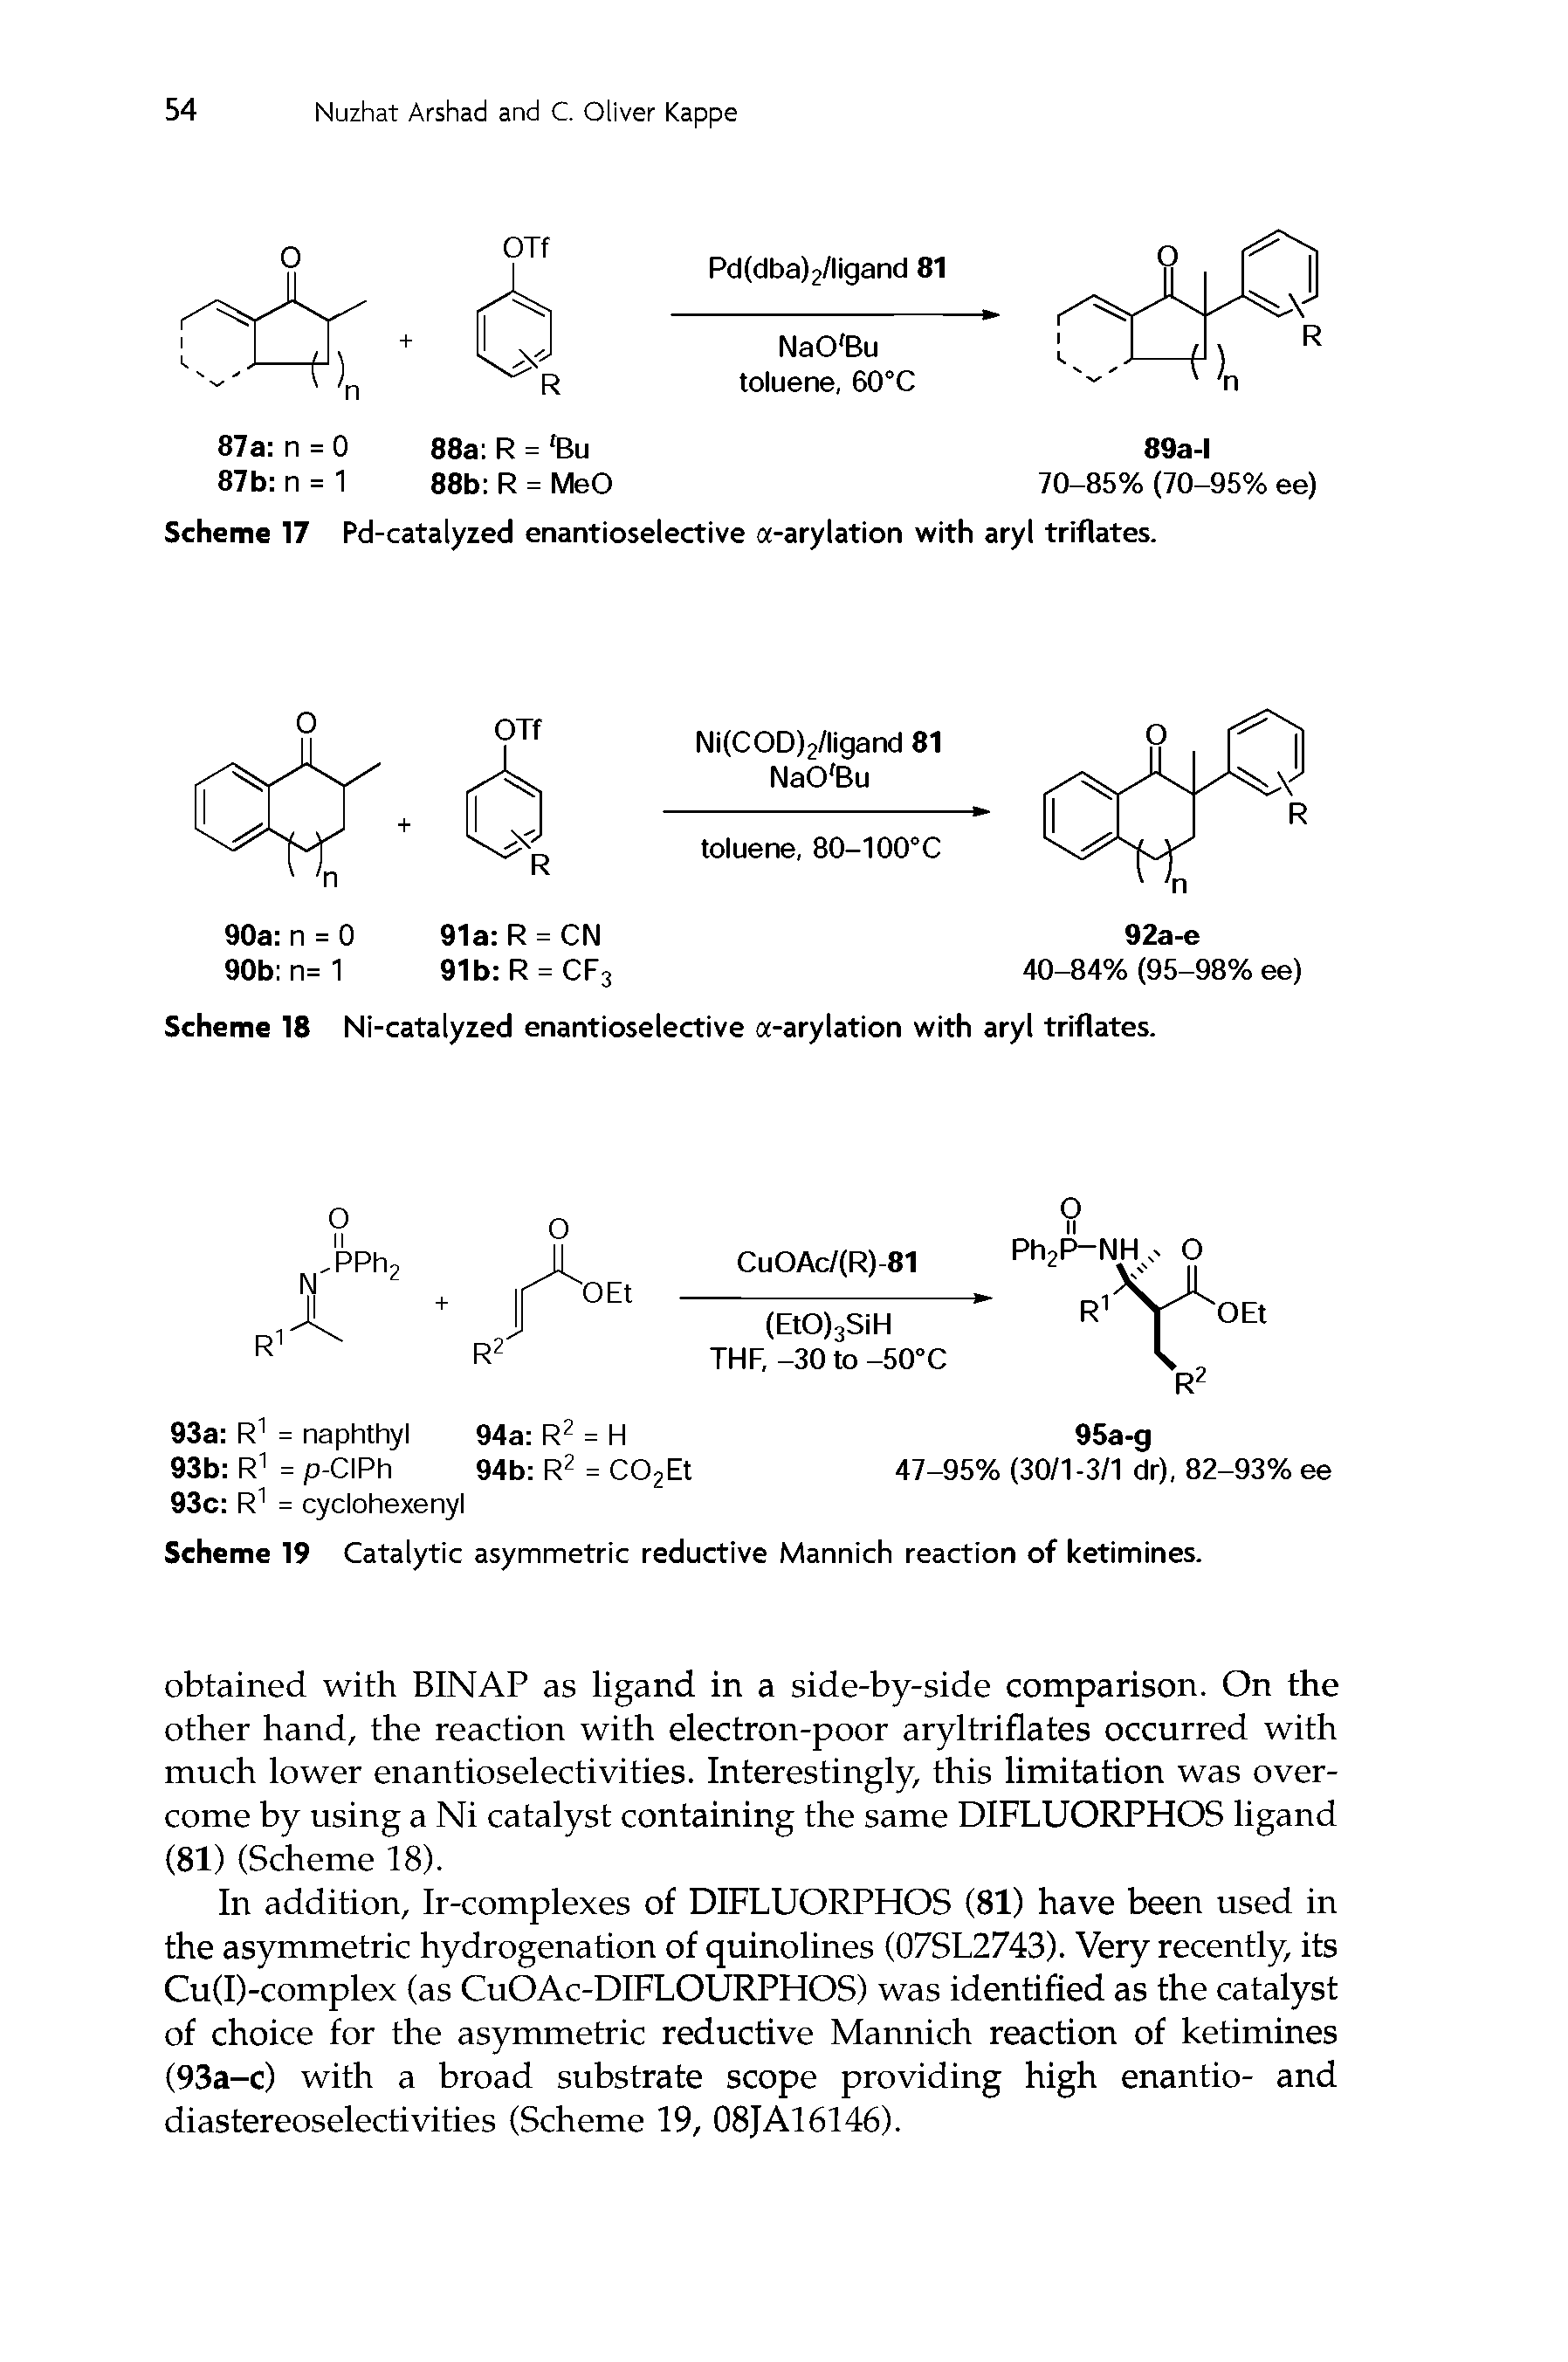 Scheme 19 Catalytic asymmetric reductive Mannich reaction of ketimines.